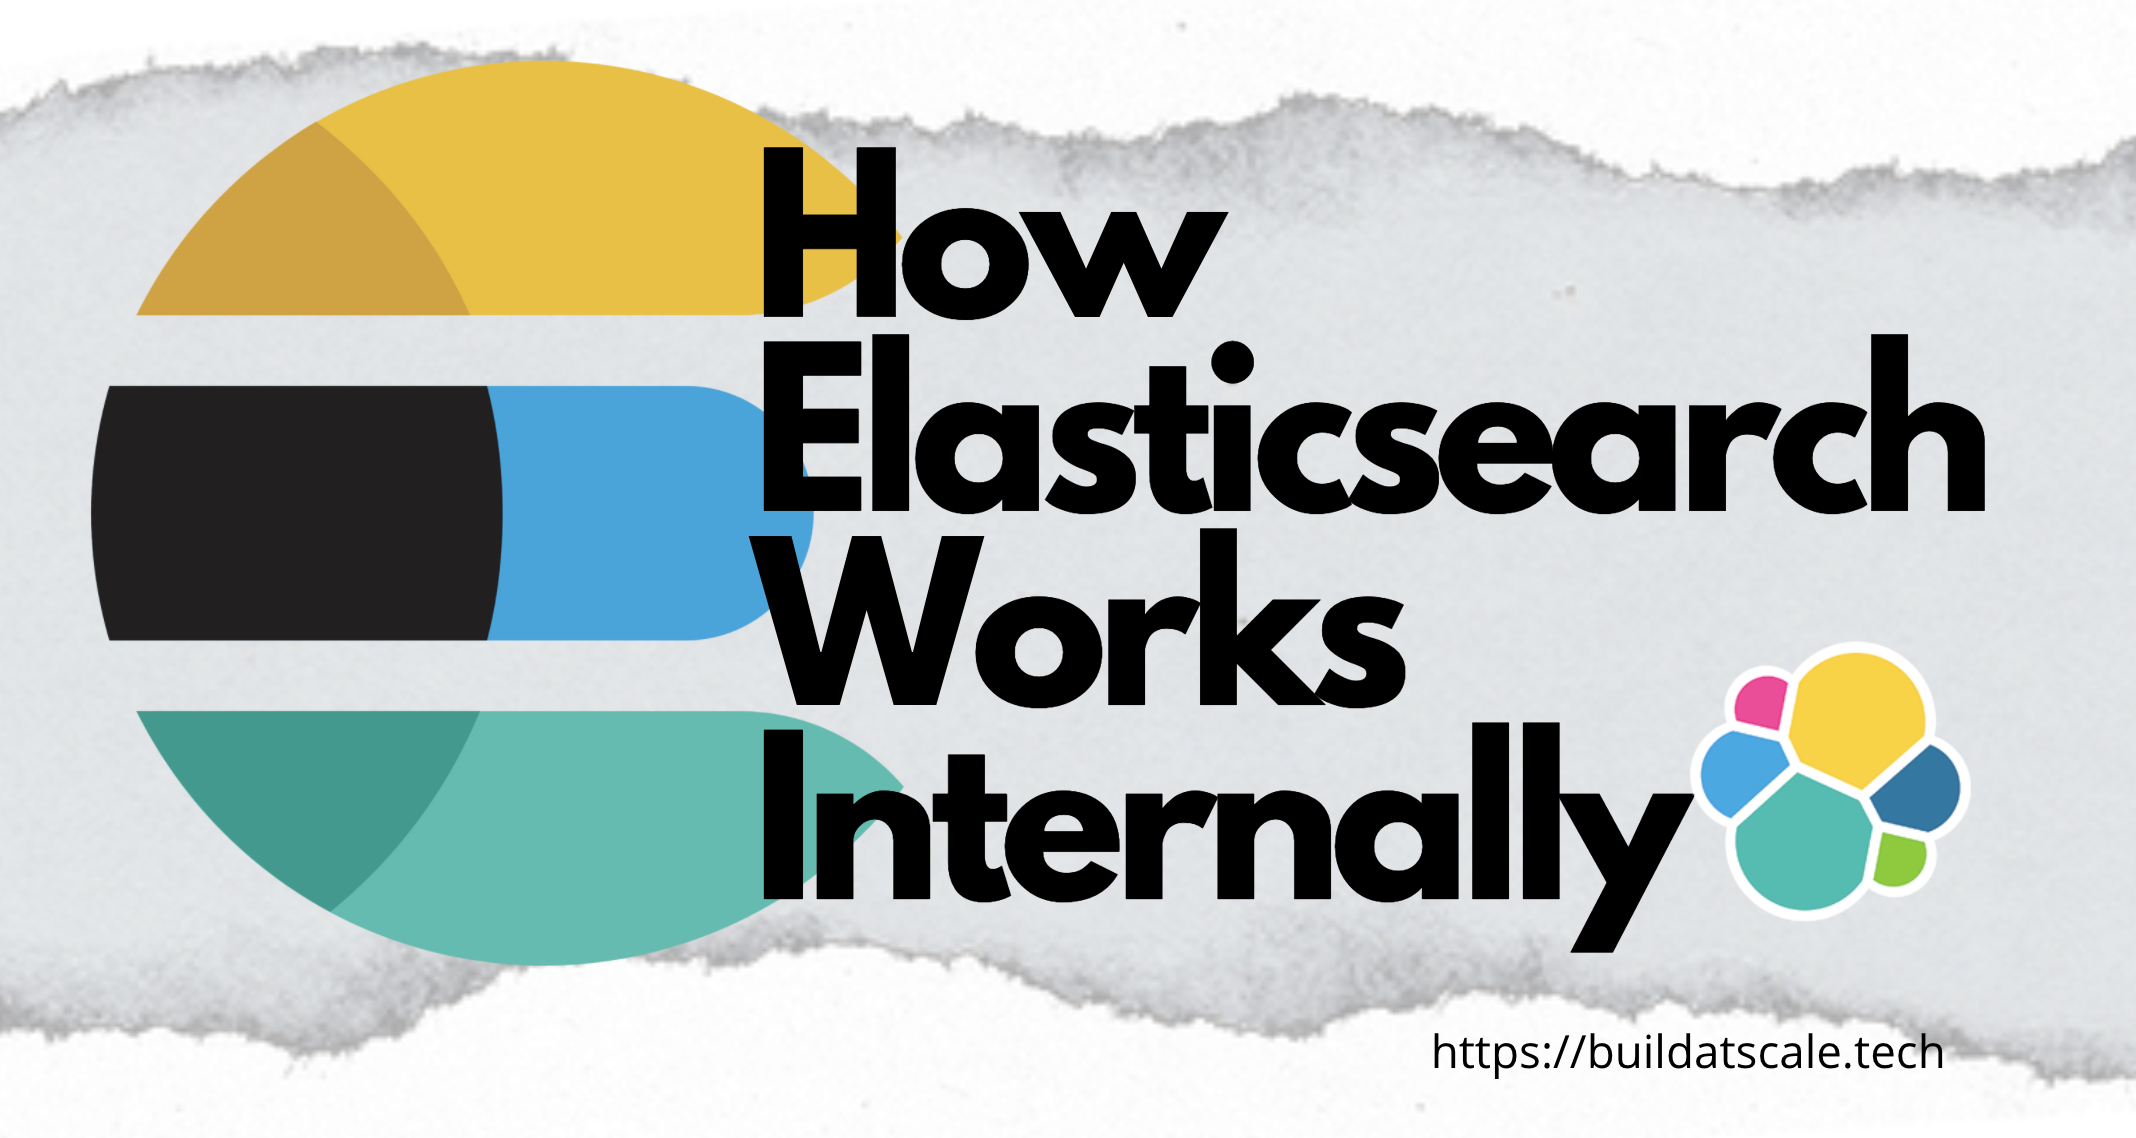 Part II: How Elasticsearch Works Internally